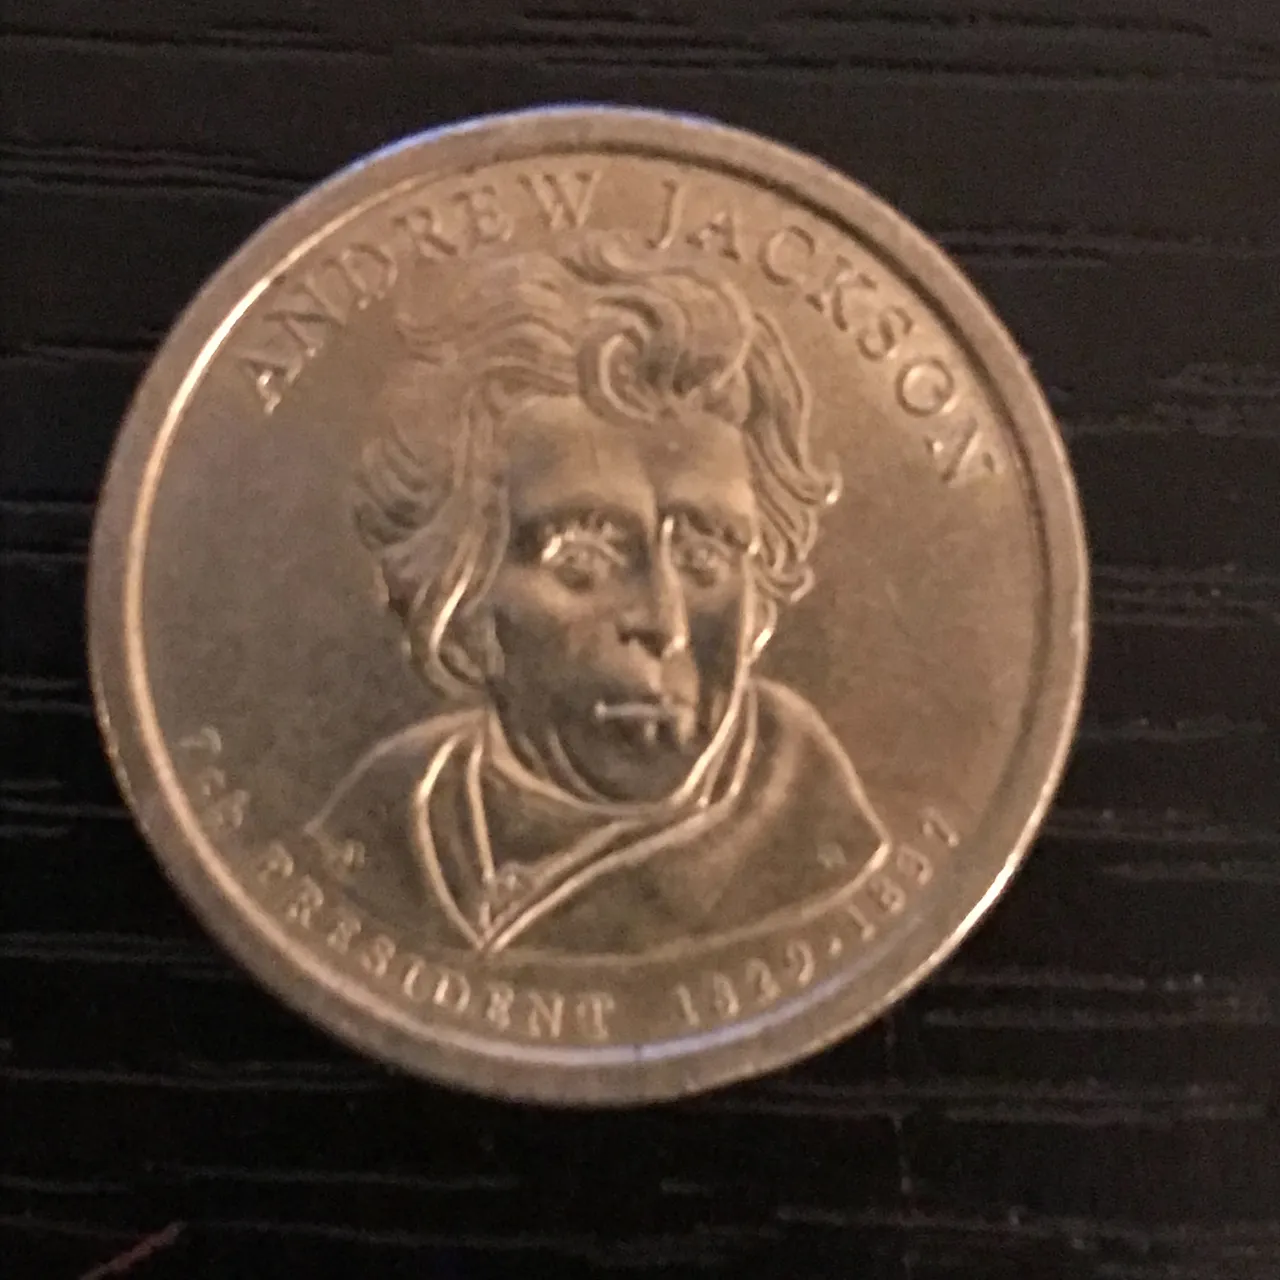 Andrew Jackson Presidential $1 USD Coin photo 2